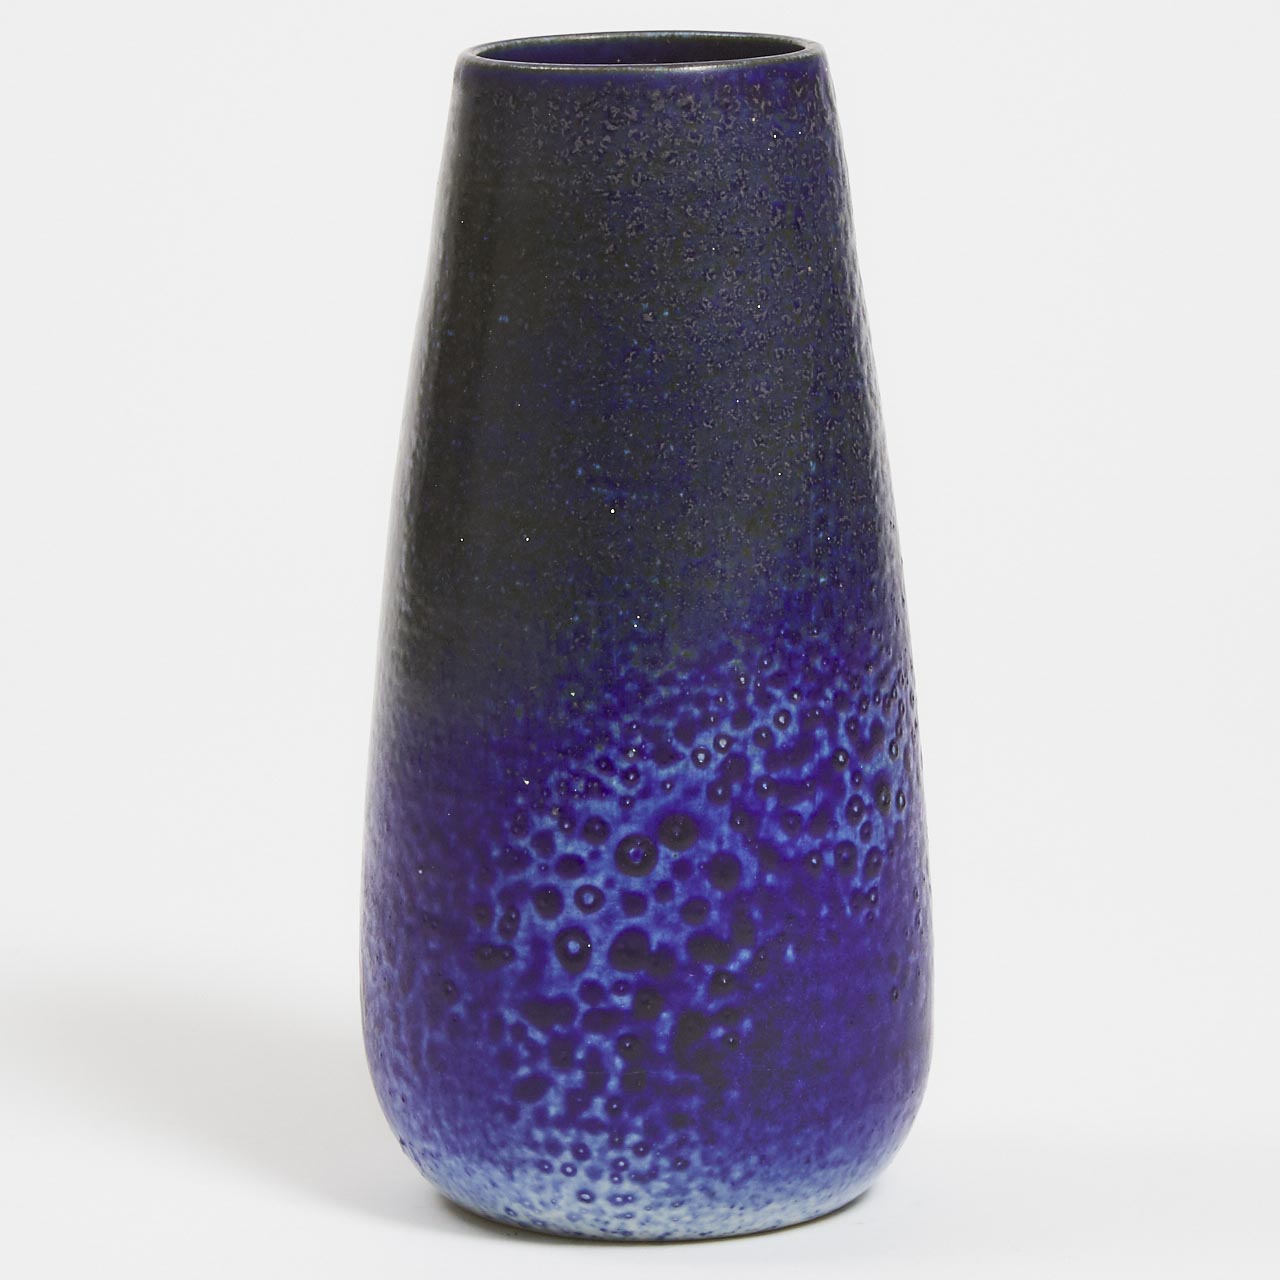 Deichmann Mottled Blue Glazed Stoneware Vase, mid-20th century